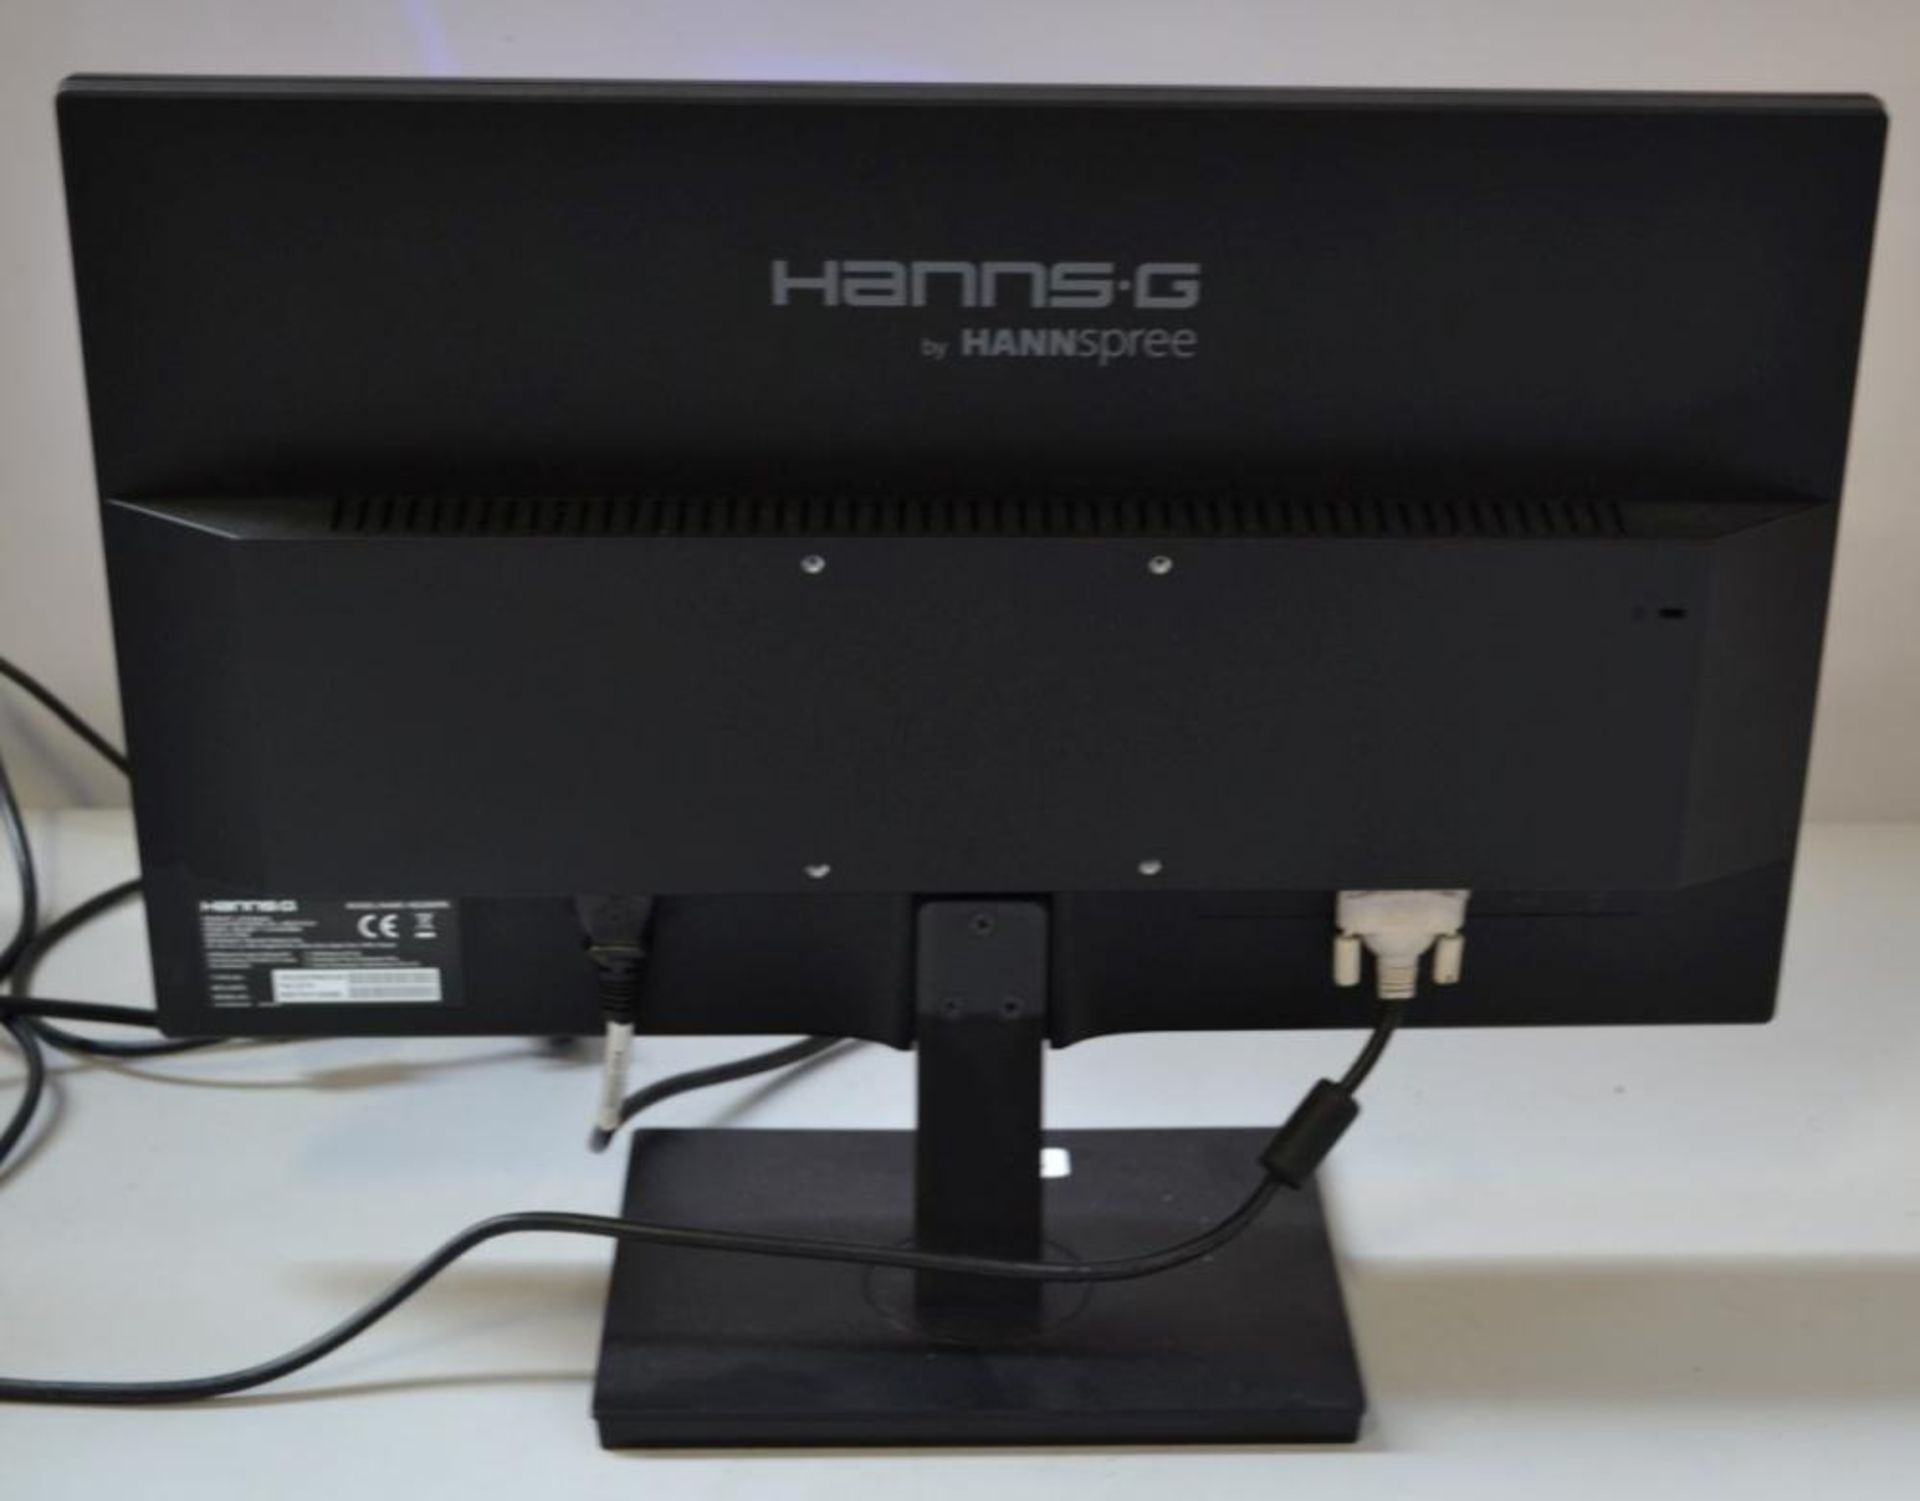 2 x HannsG HE225DPB 21.5" Full HD DVI LED PC Monitors - Ref J2225 - CL371 - Location: Altrincham - Image 2 of 4